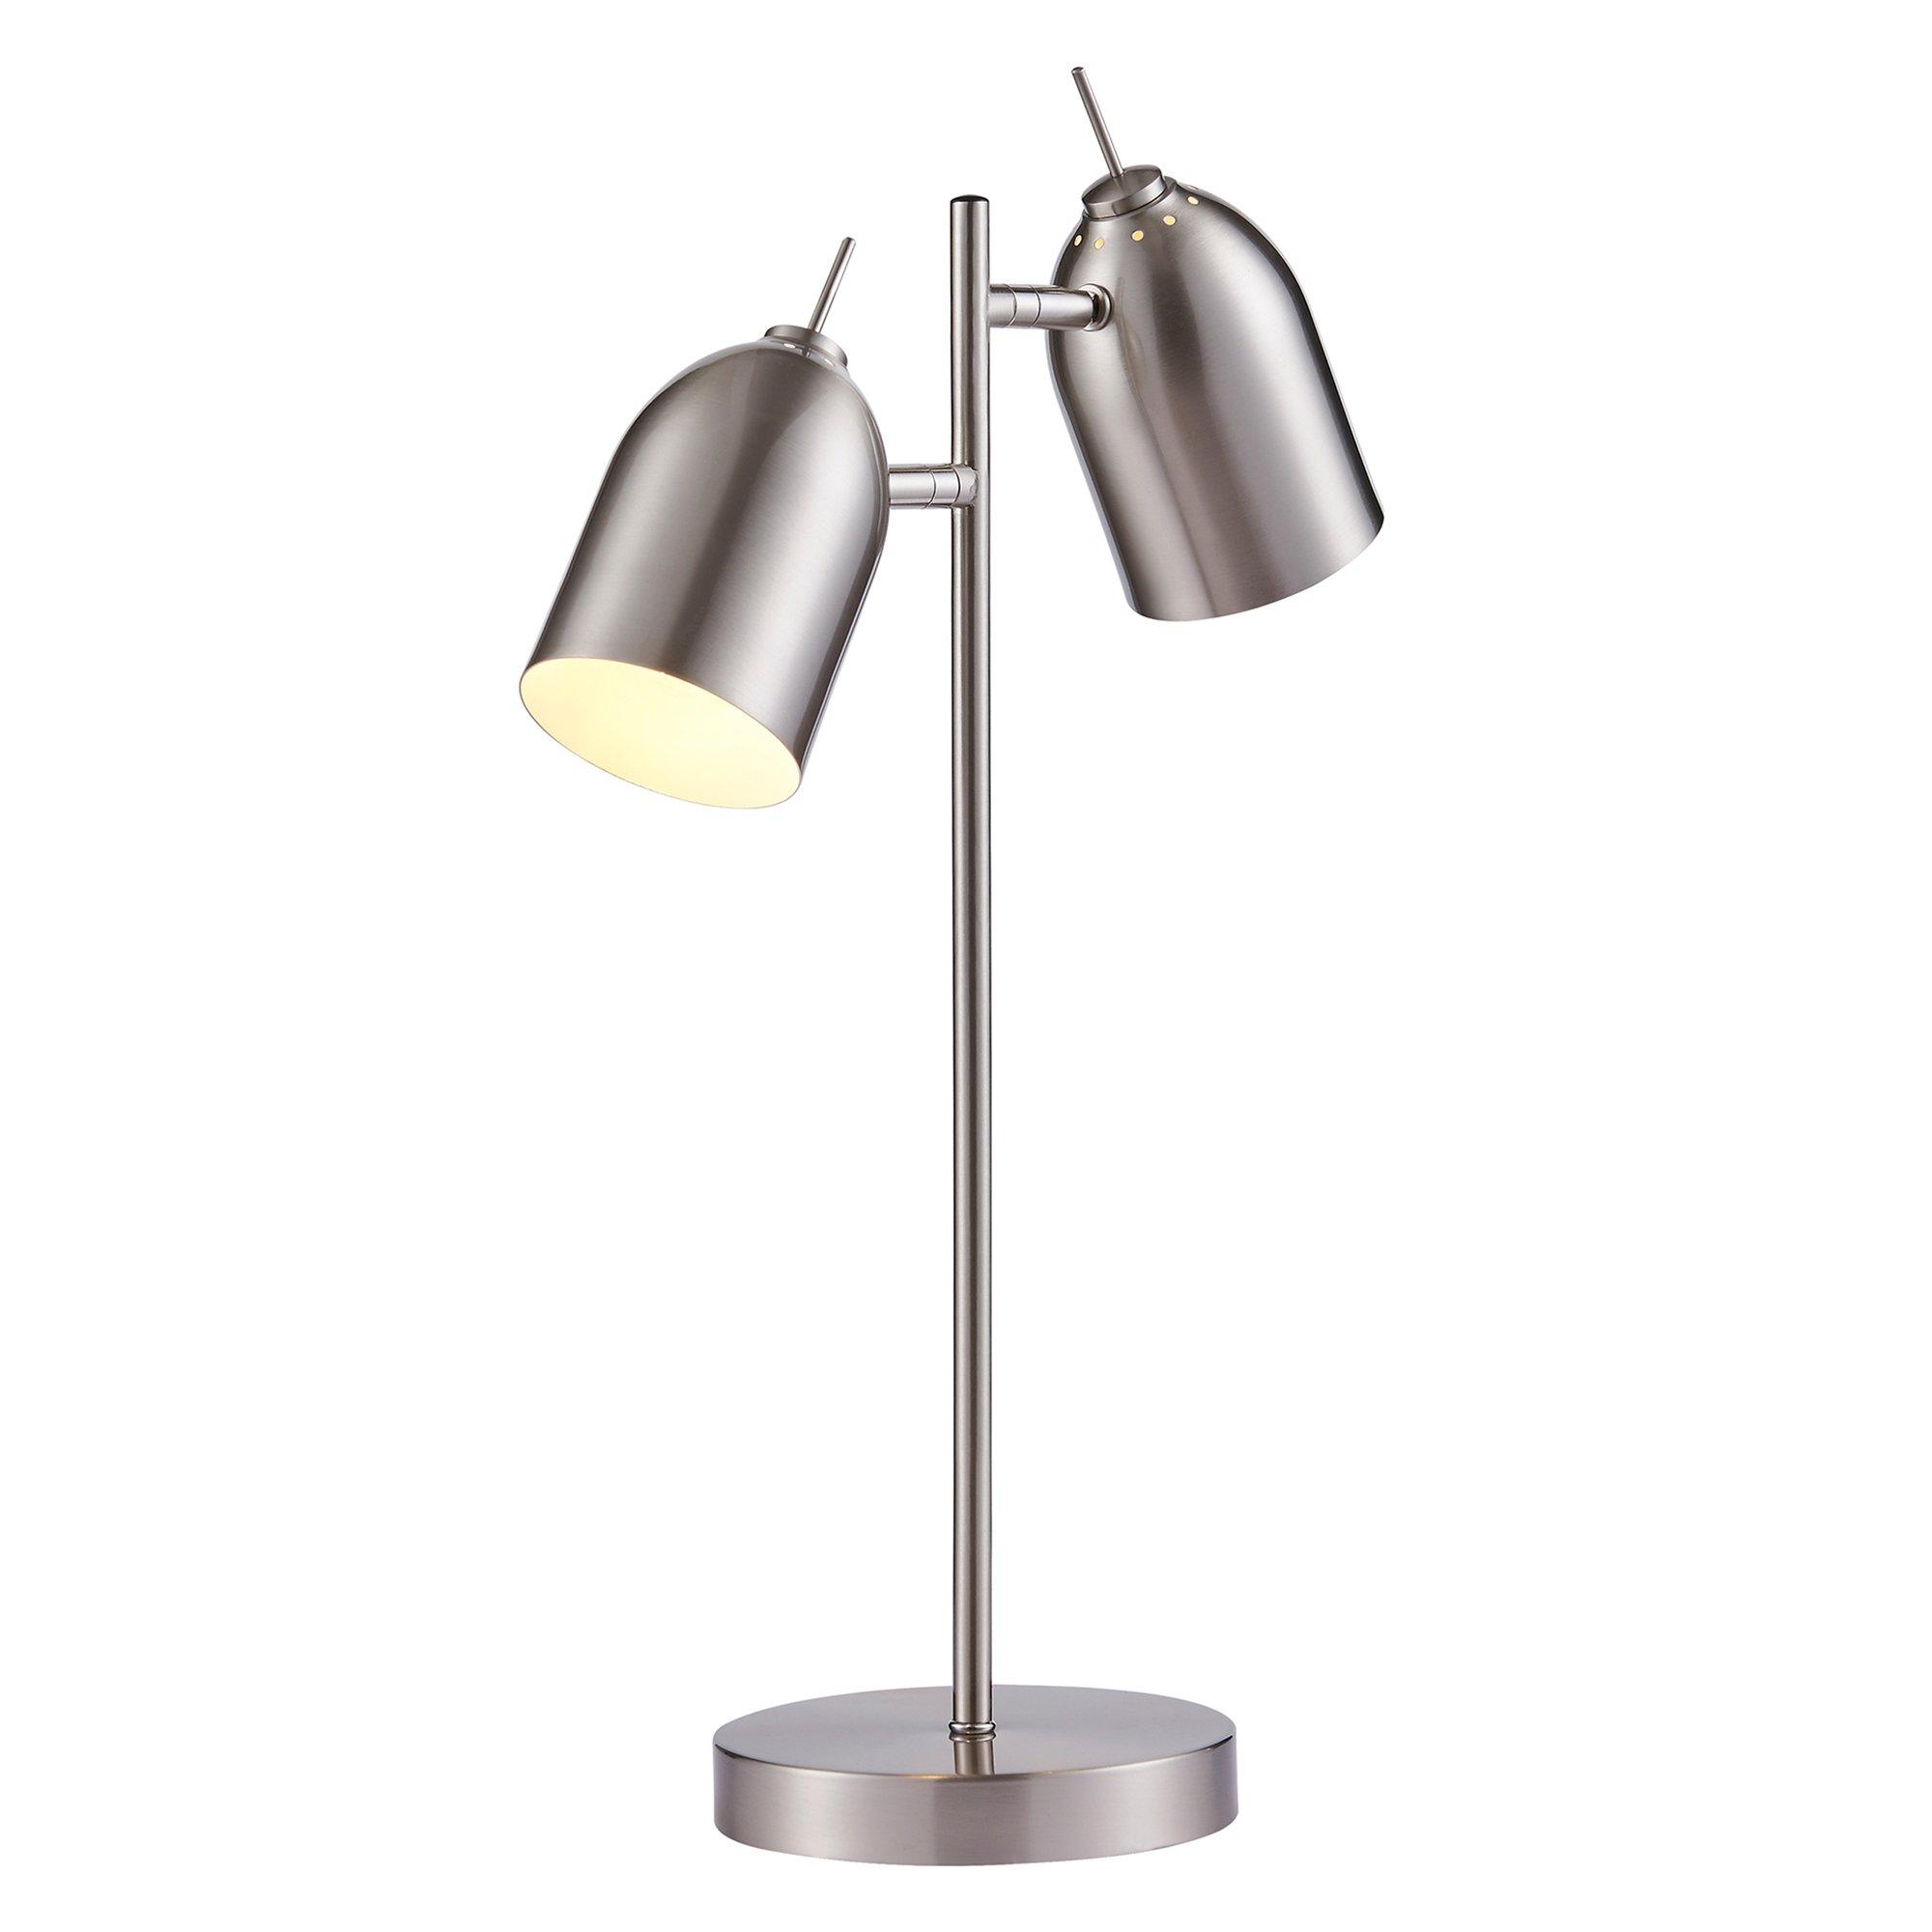 Teamson Home Mason Modern Double Light Adjustable Table Lamp Standing Light Chrome Shade Finish for 